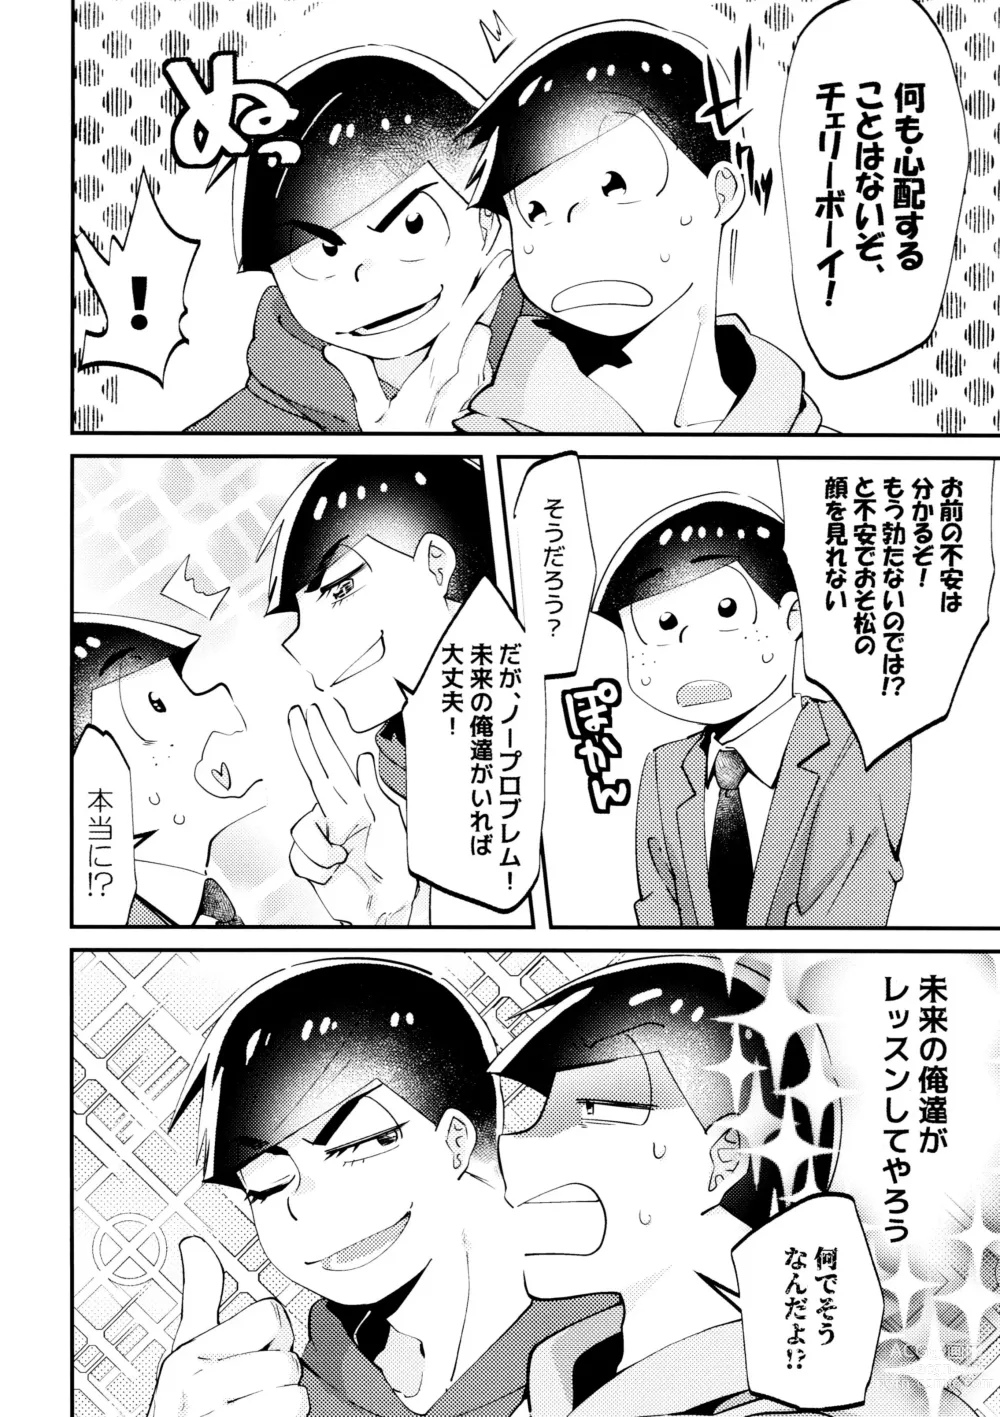 Page 7 of doujinshi Cherry boy END